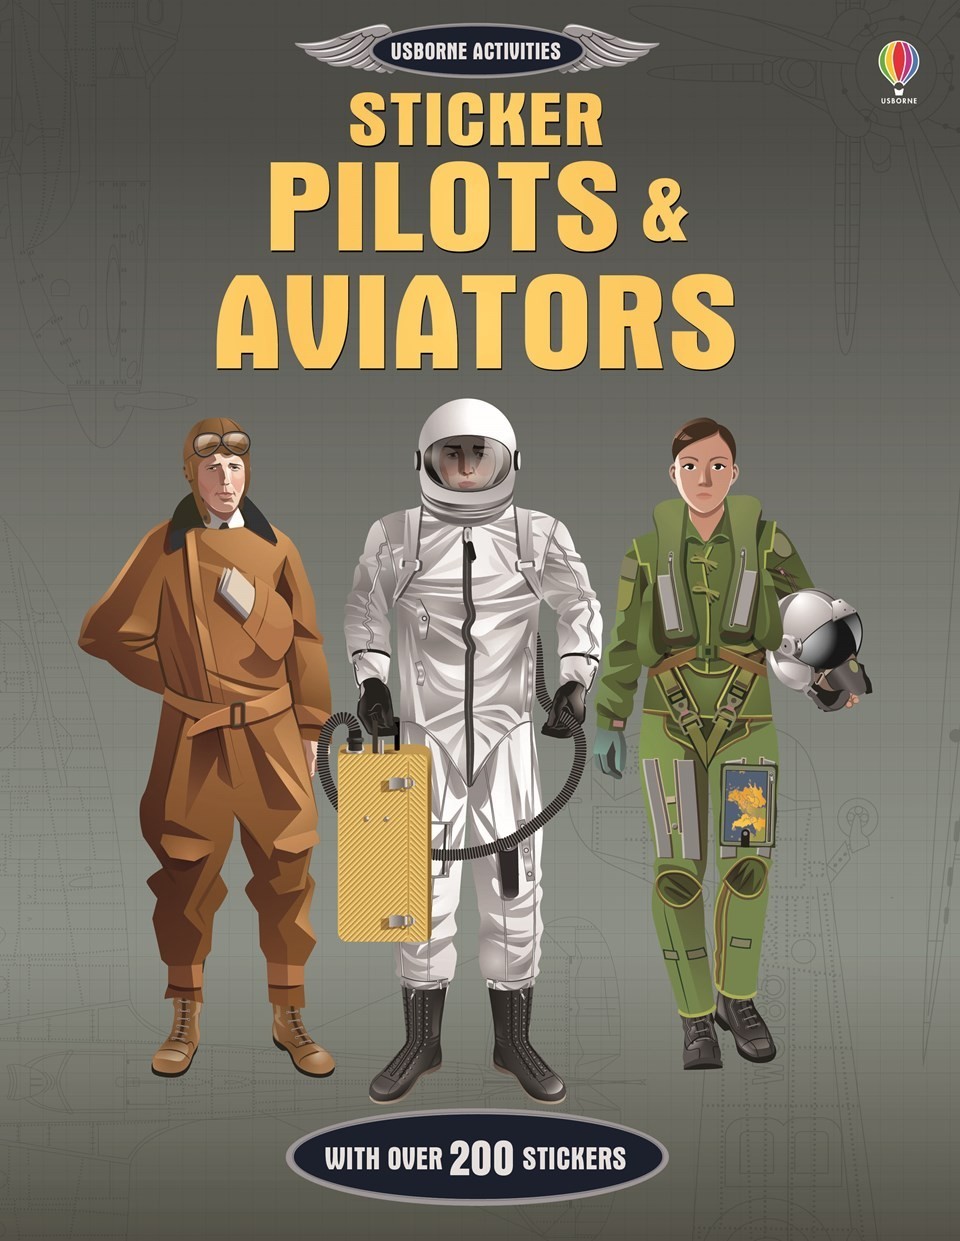 Sticker pilots and aviators